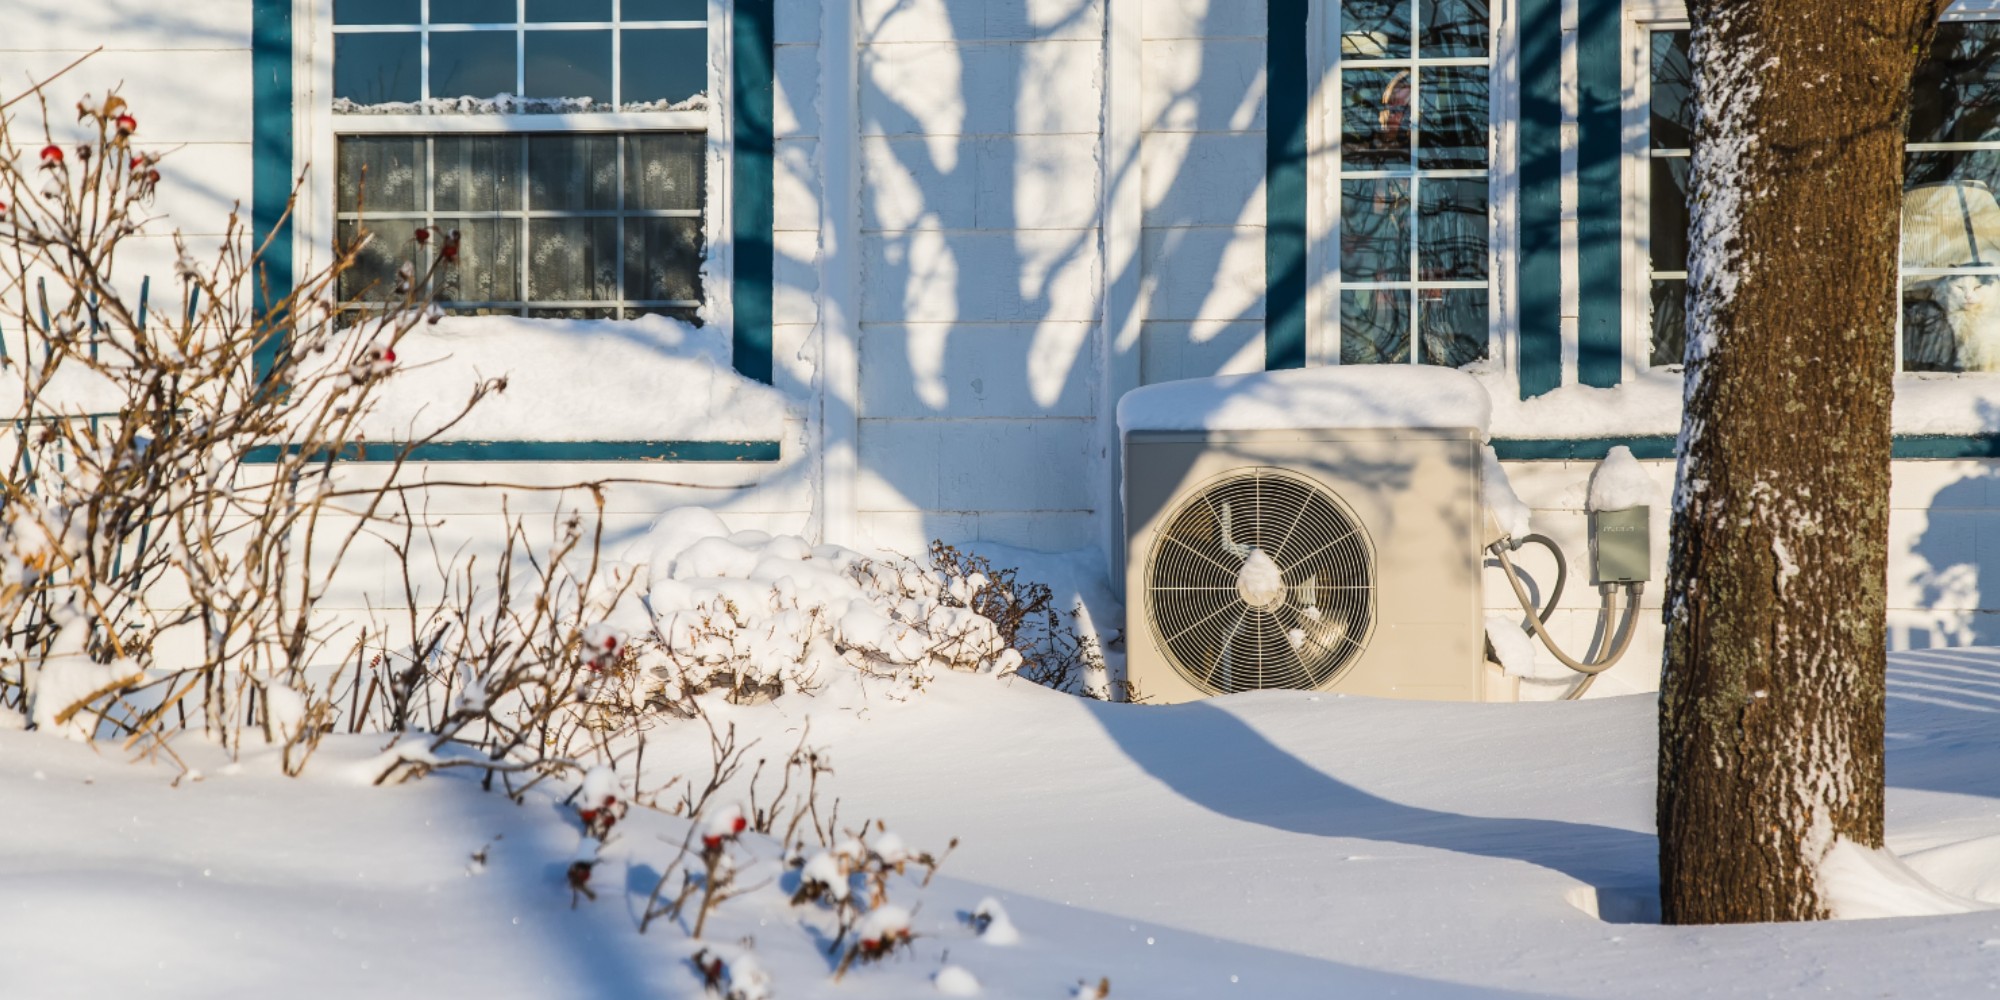 Winter Services To Offer Blog - HVAC 